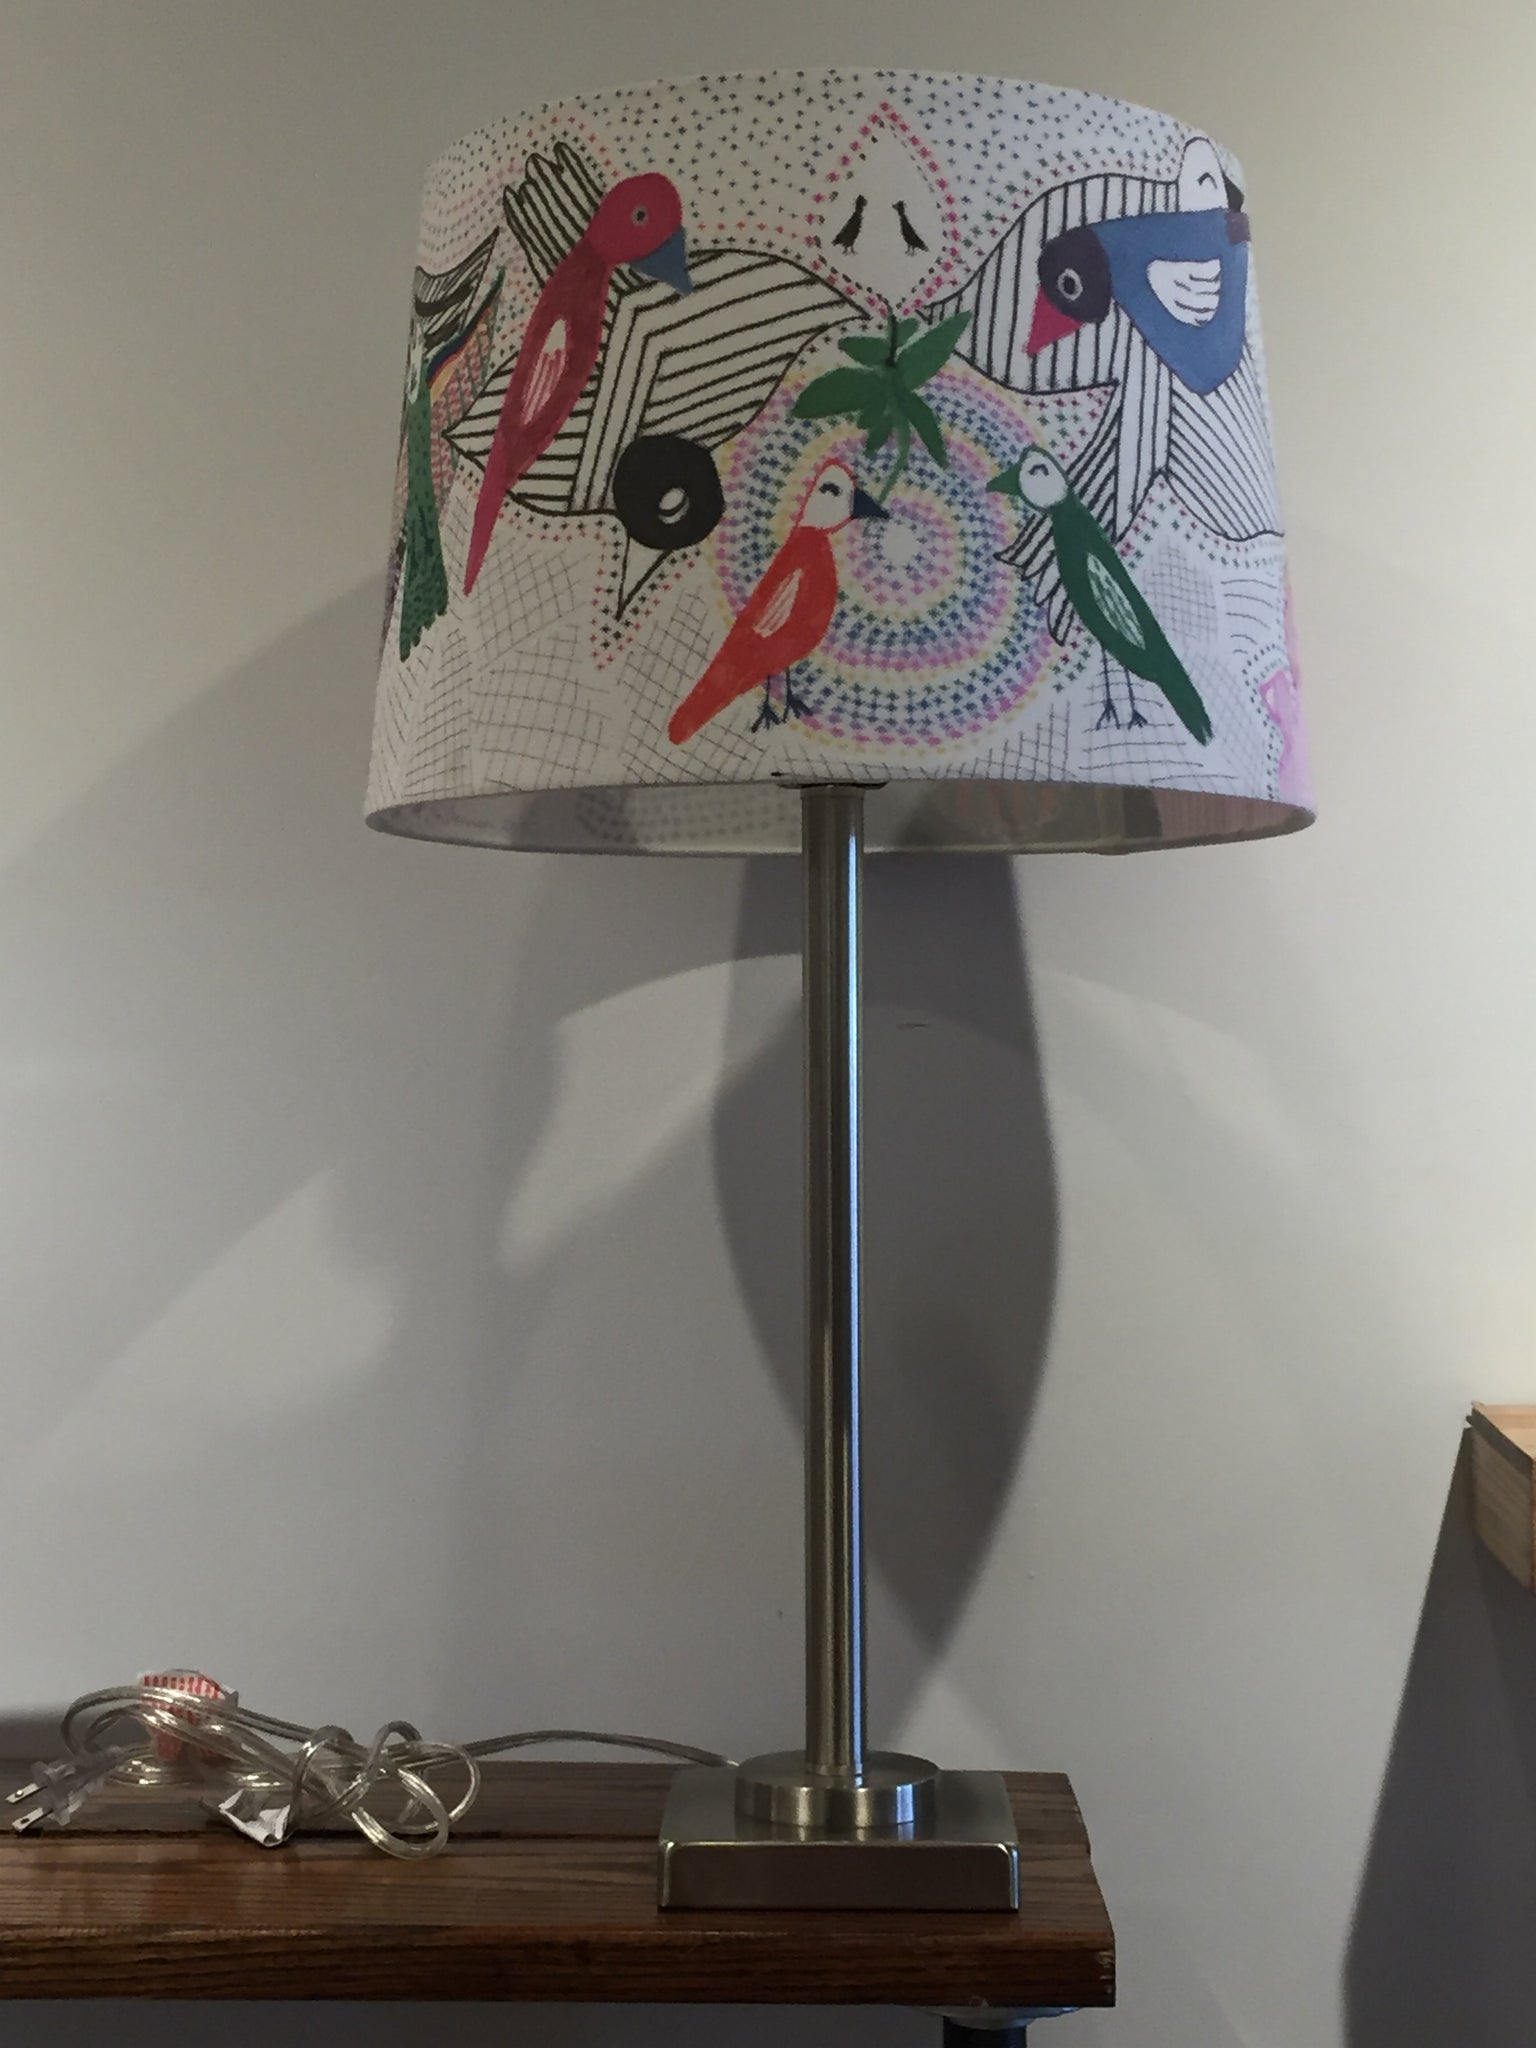 Large Lamp bird lampshade - Red Bank Artisan Collective jewelry art vintage recycled Lamp Shades, Tim Aanensen